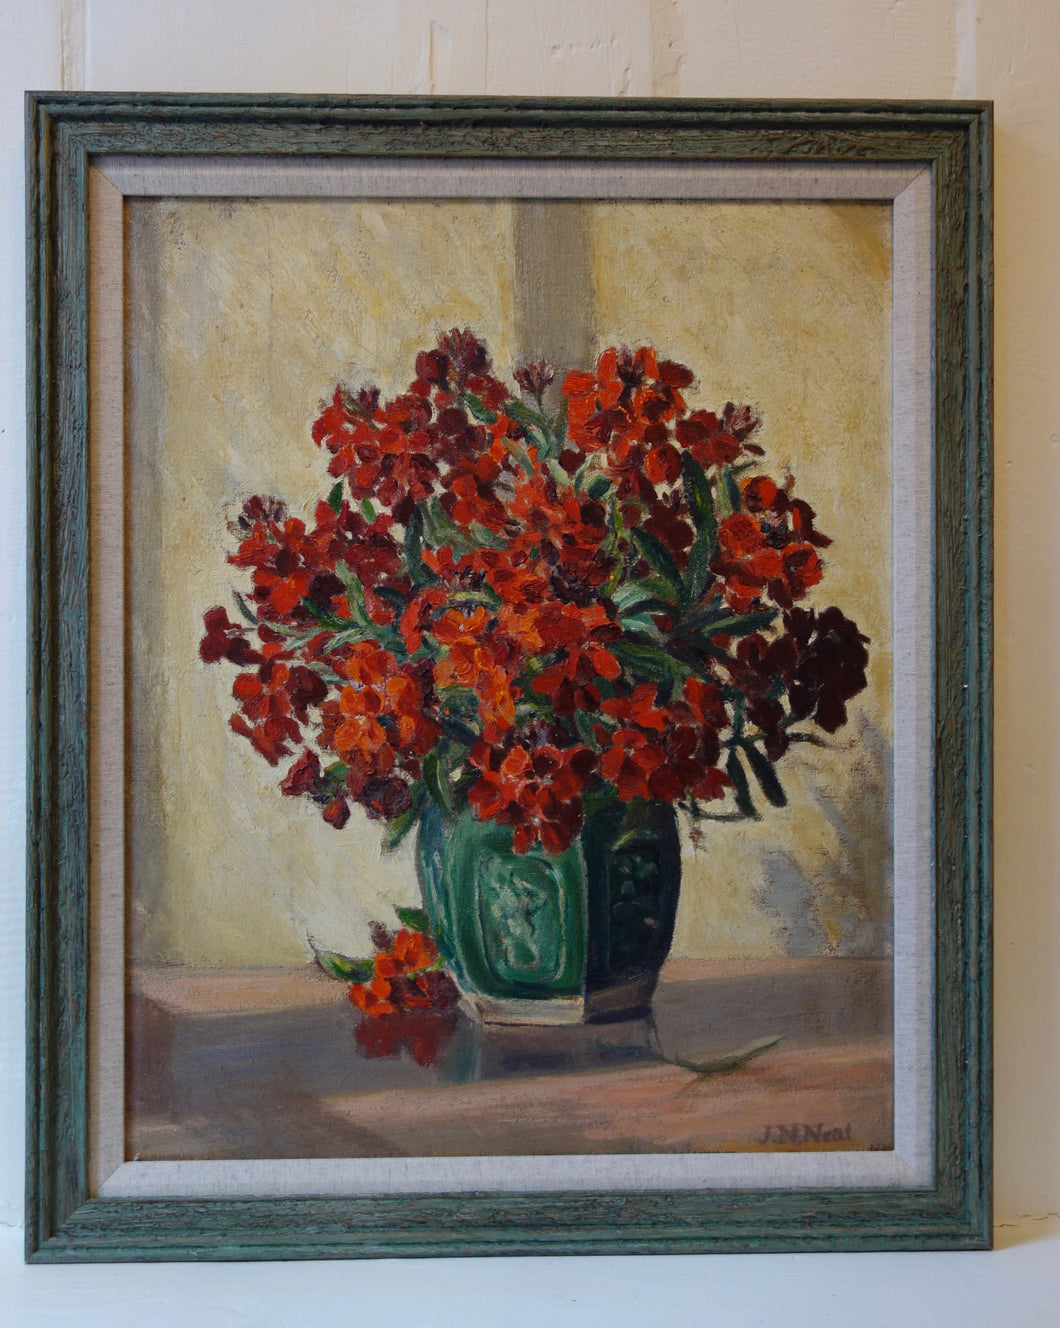 Oil painting on board: Red phlox in a green vase (artist: J N Neal)